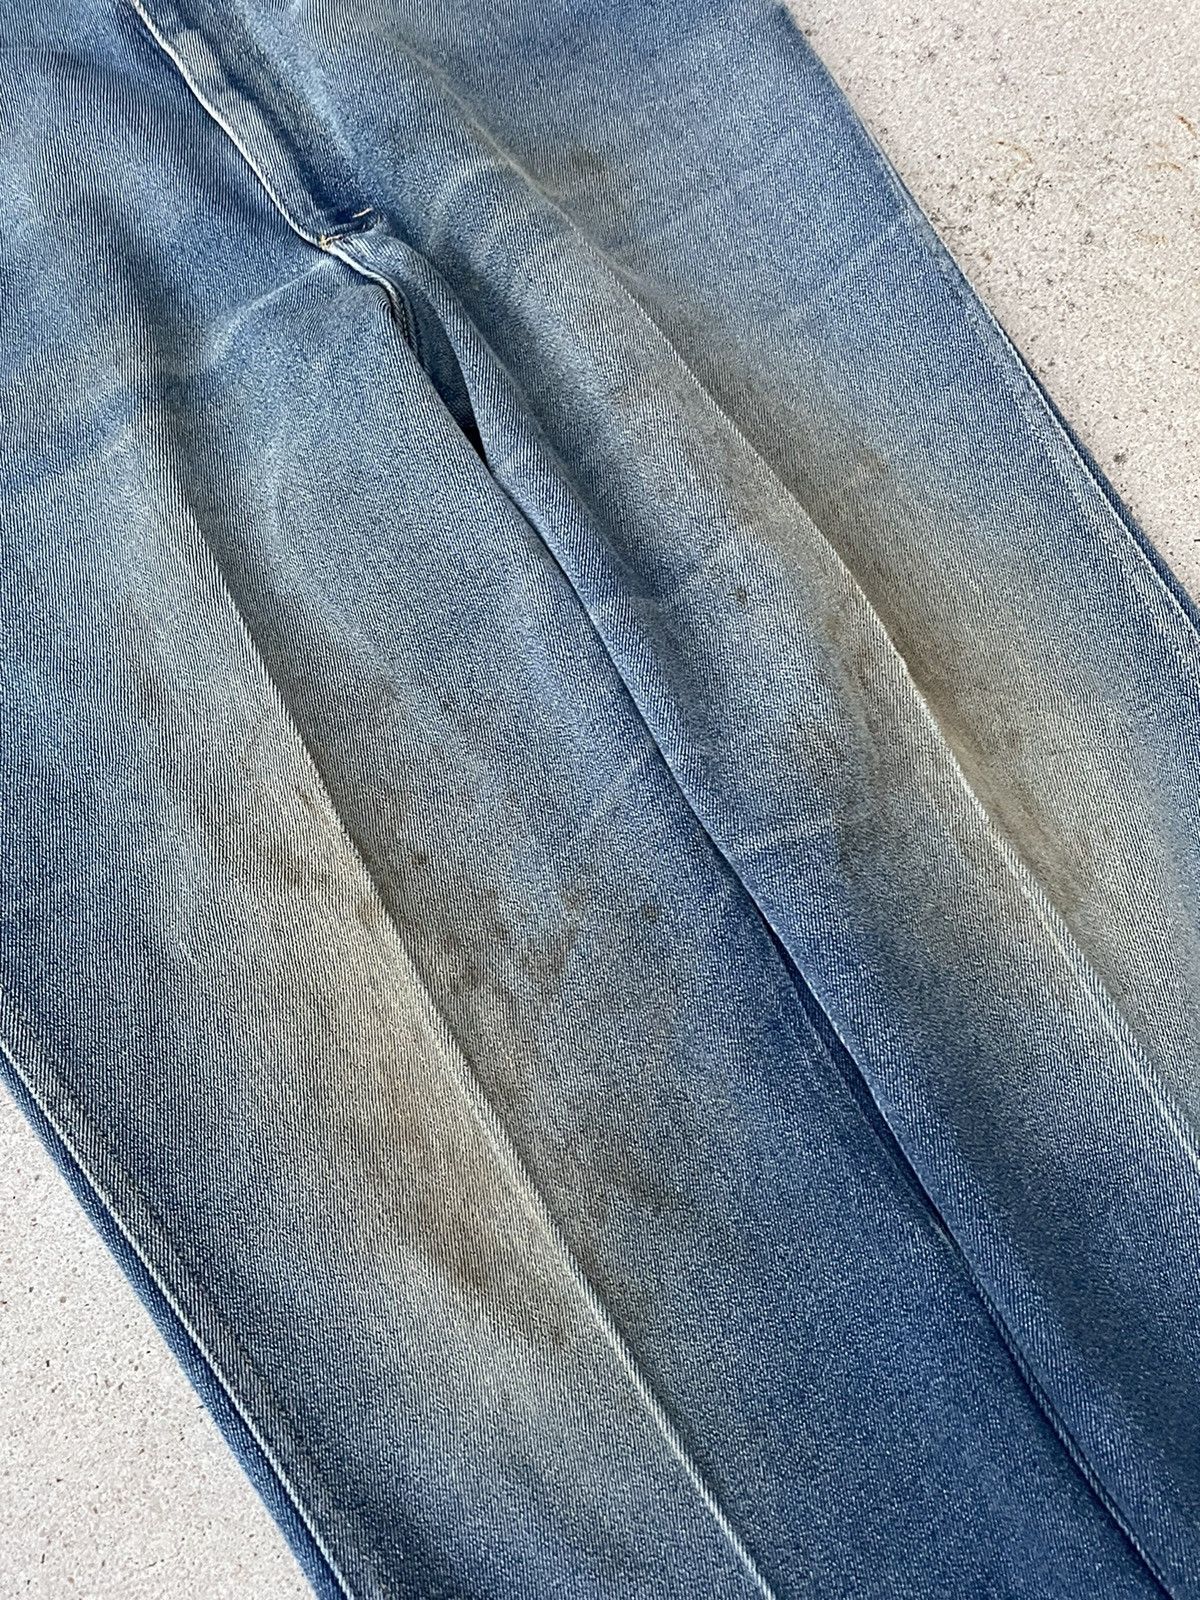 Vintage Vintage 70s Lee Bootcut Distressed Mud Wash Jeans Mens 40x32 Size US 40 / EU 56 - 5 Thumbnail